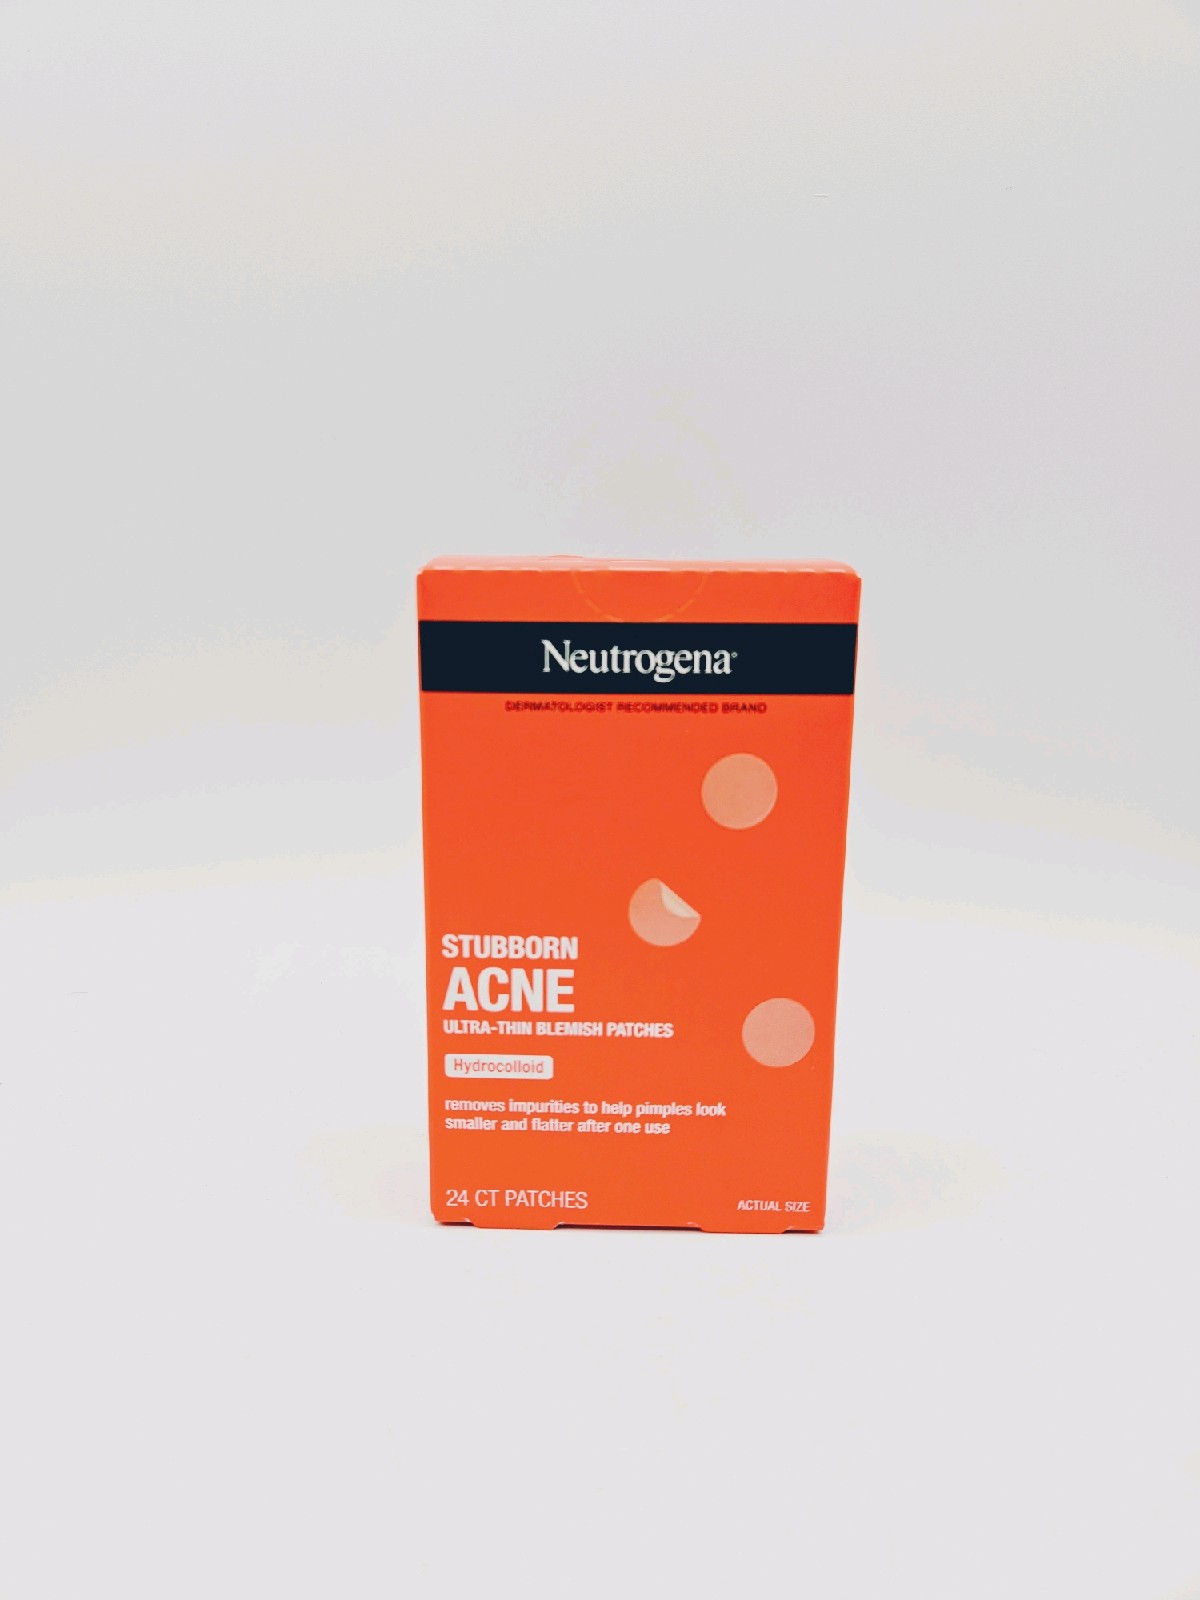 Neutrogena Stubborn Acne Hydrocolloid